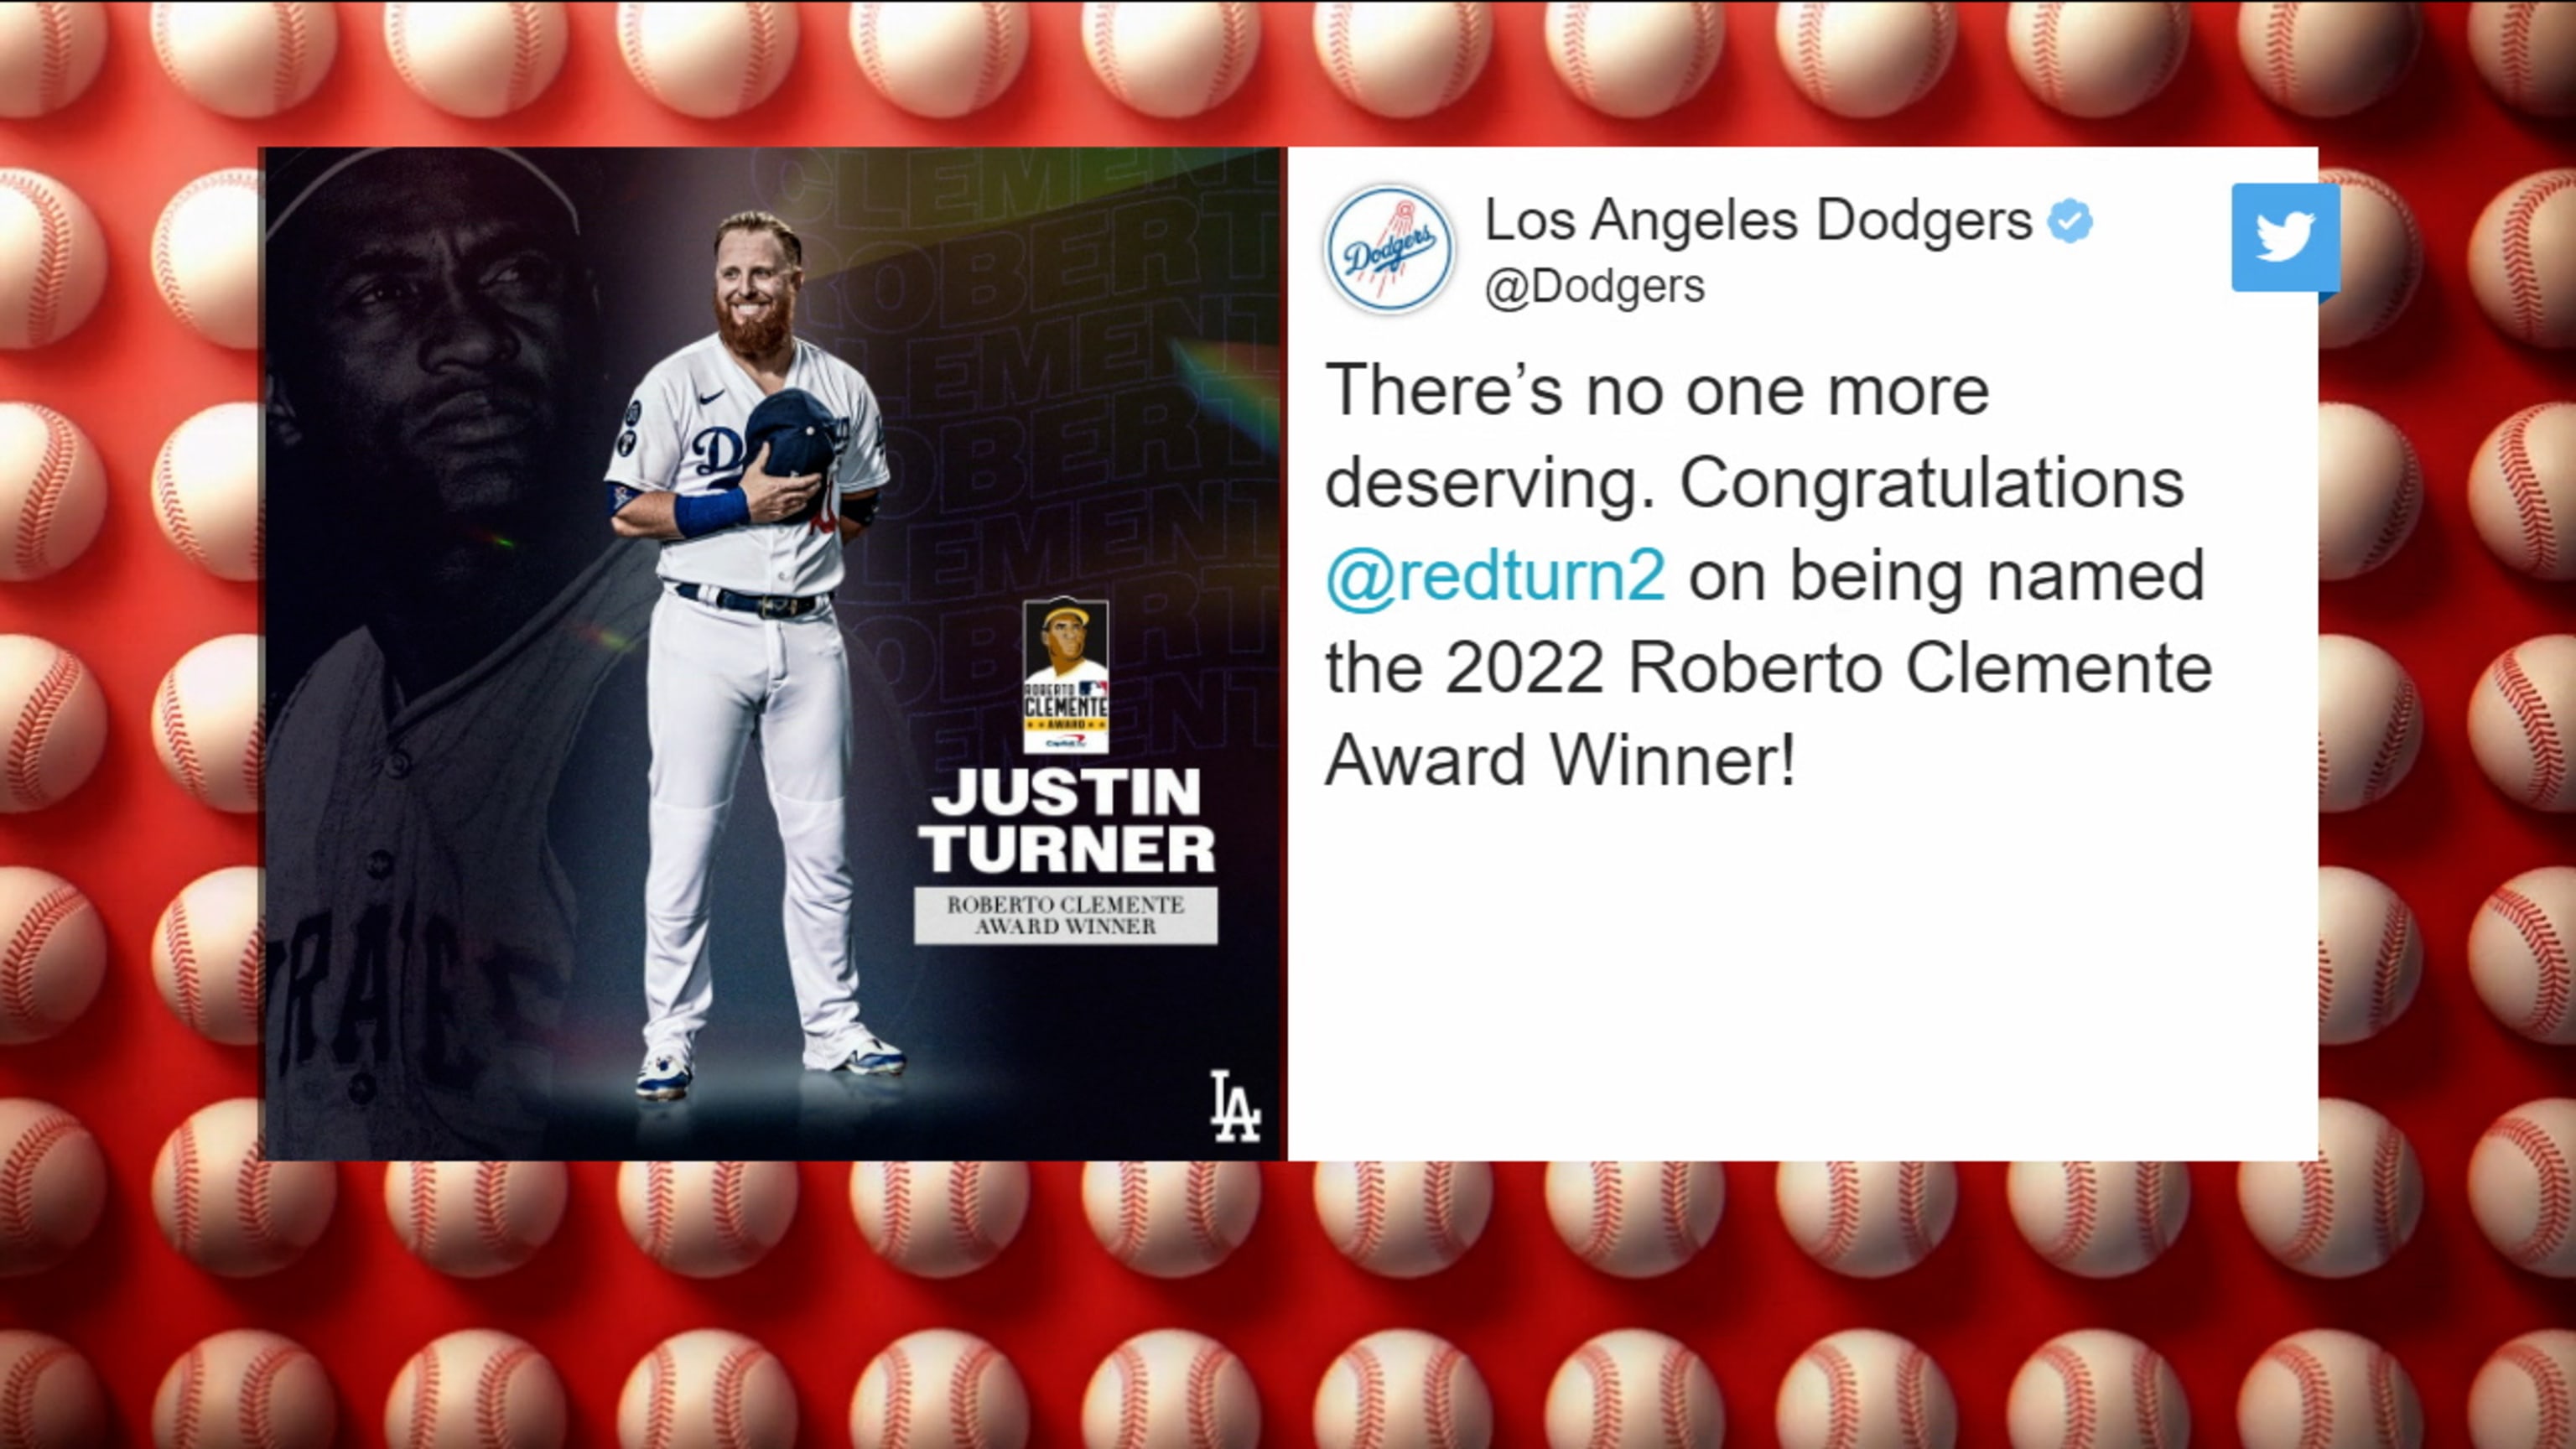 Justin Turner wins 2022 Roberto Clemente Award